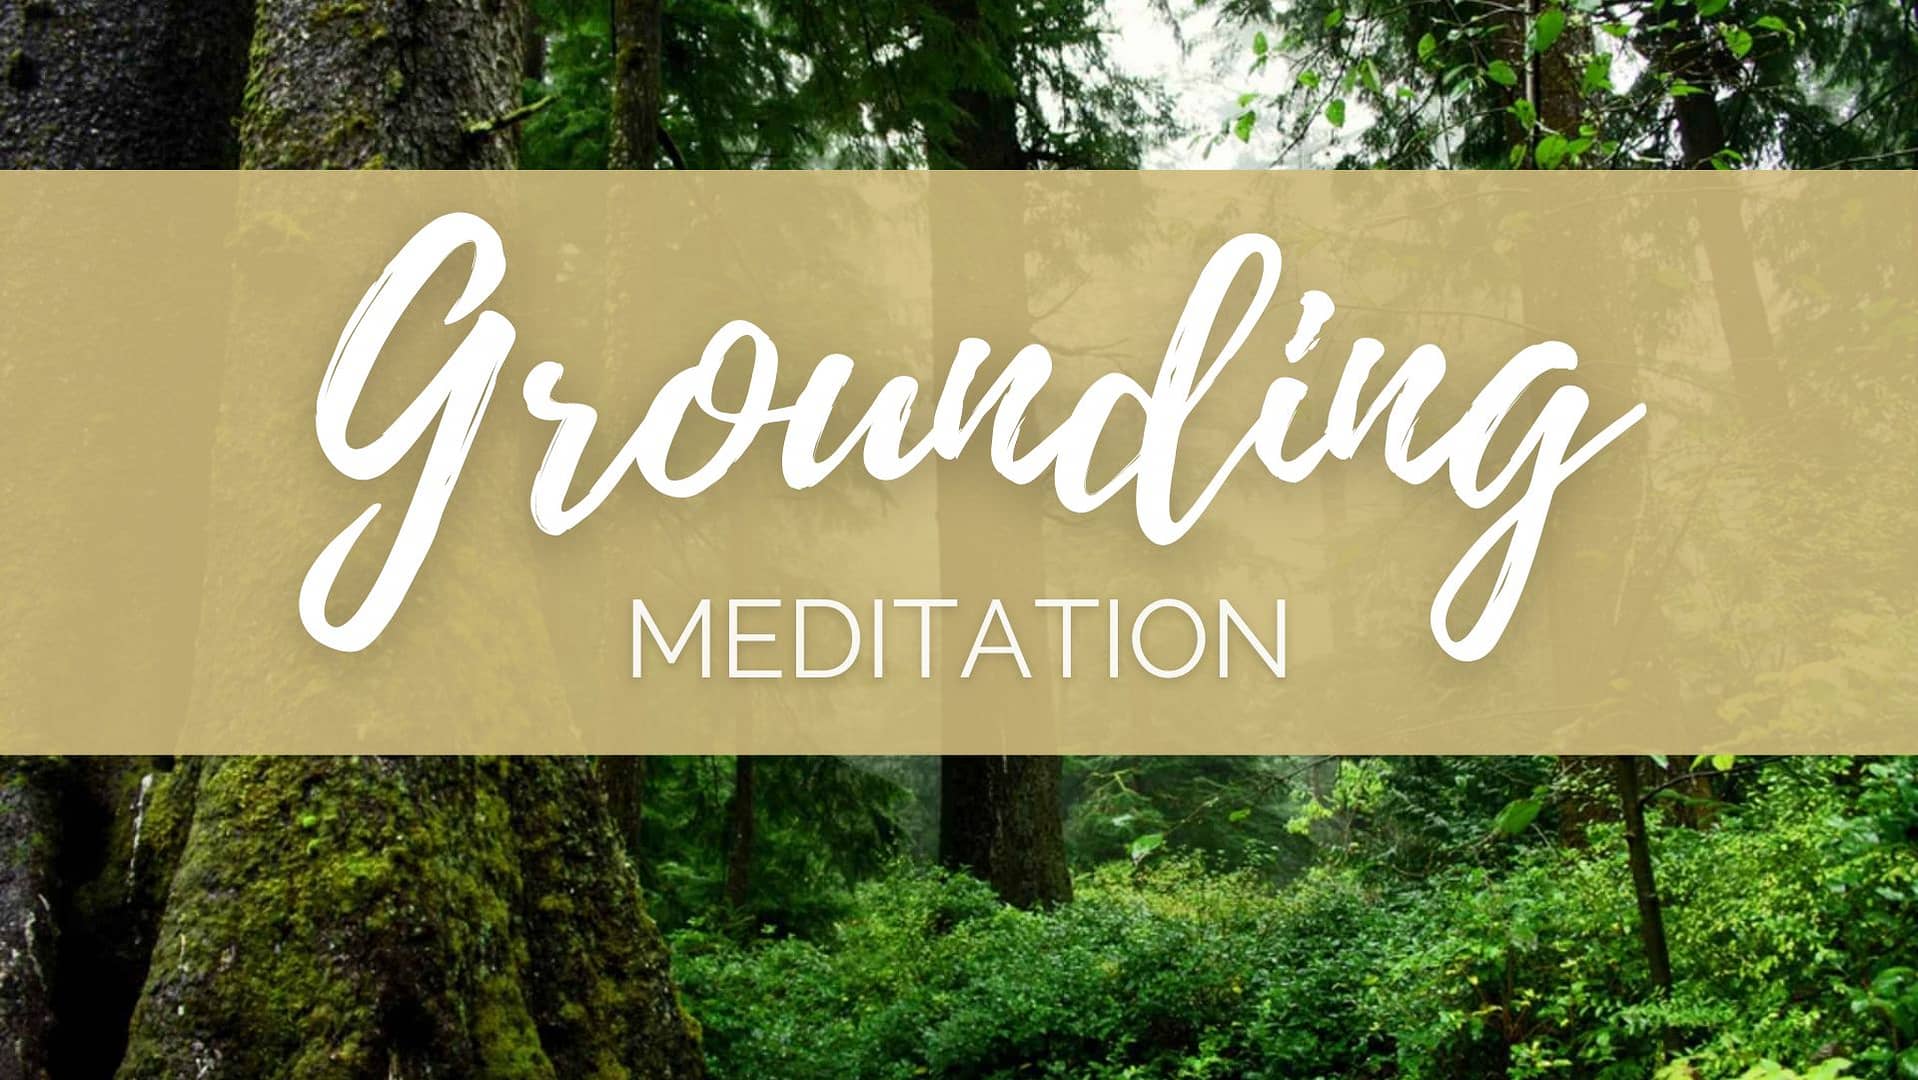 Grounding Meditation